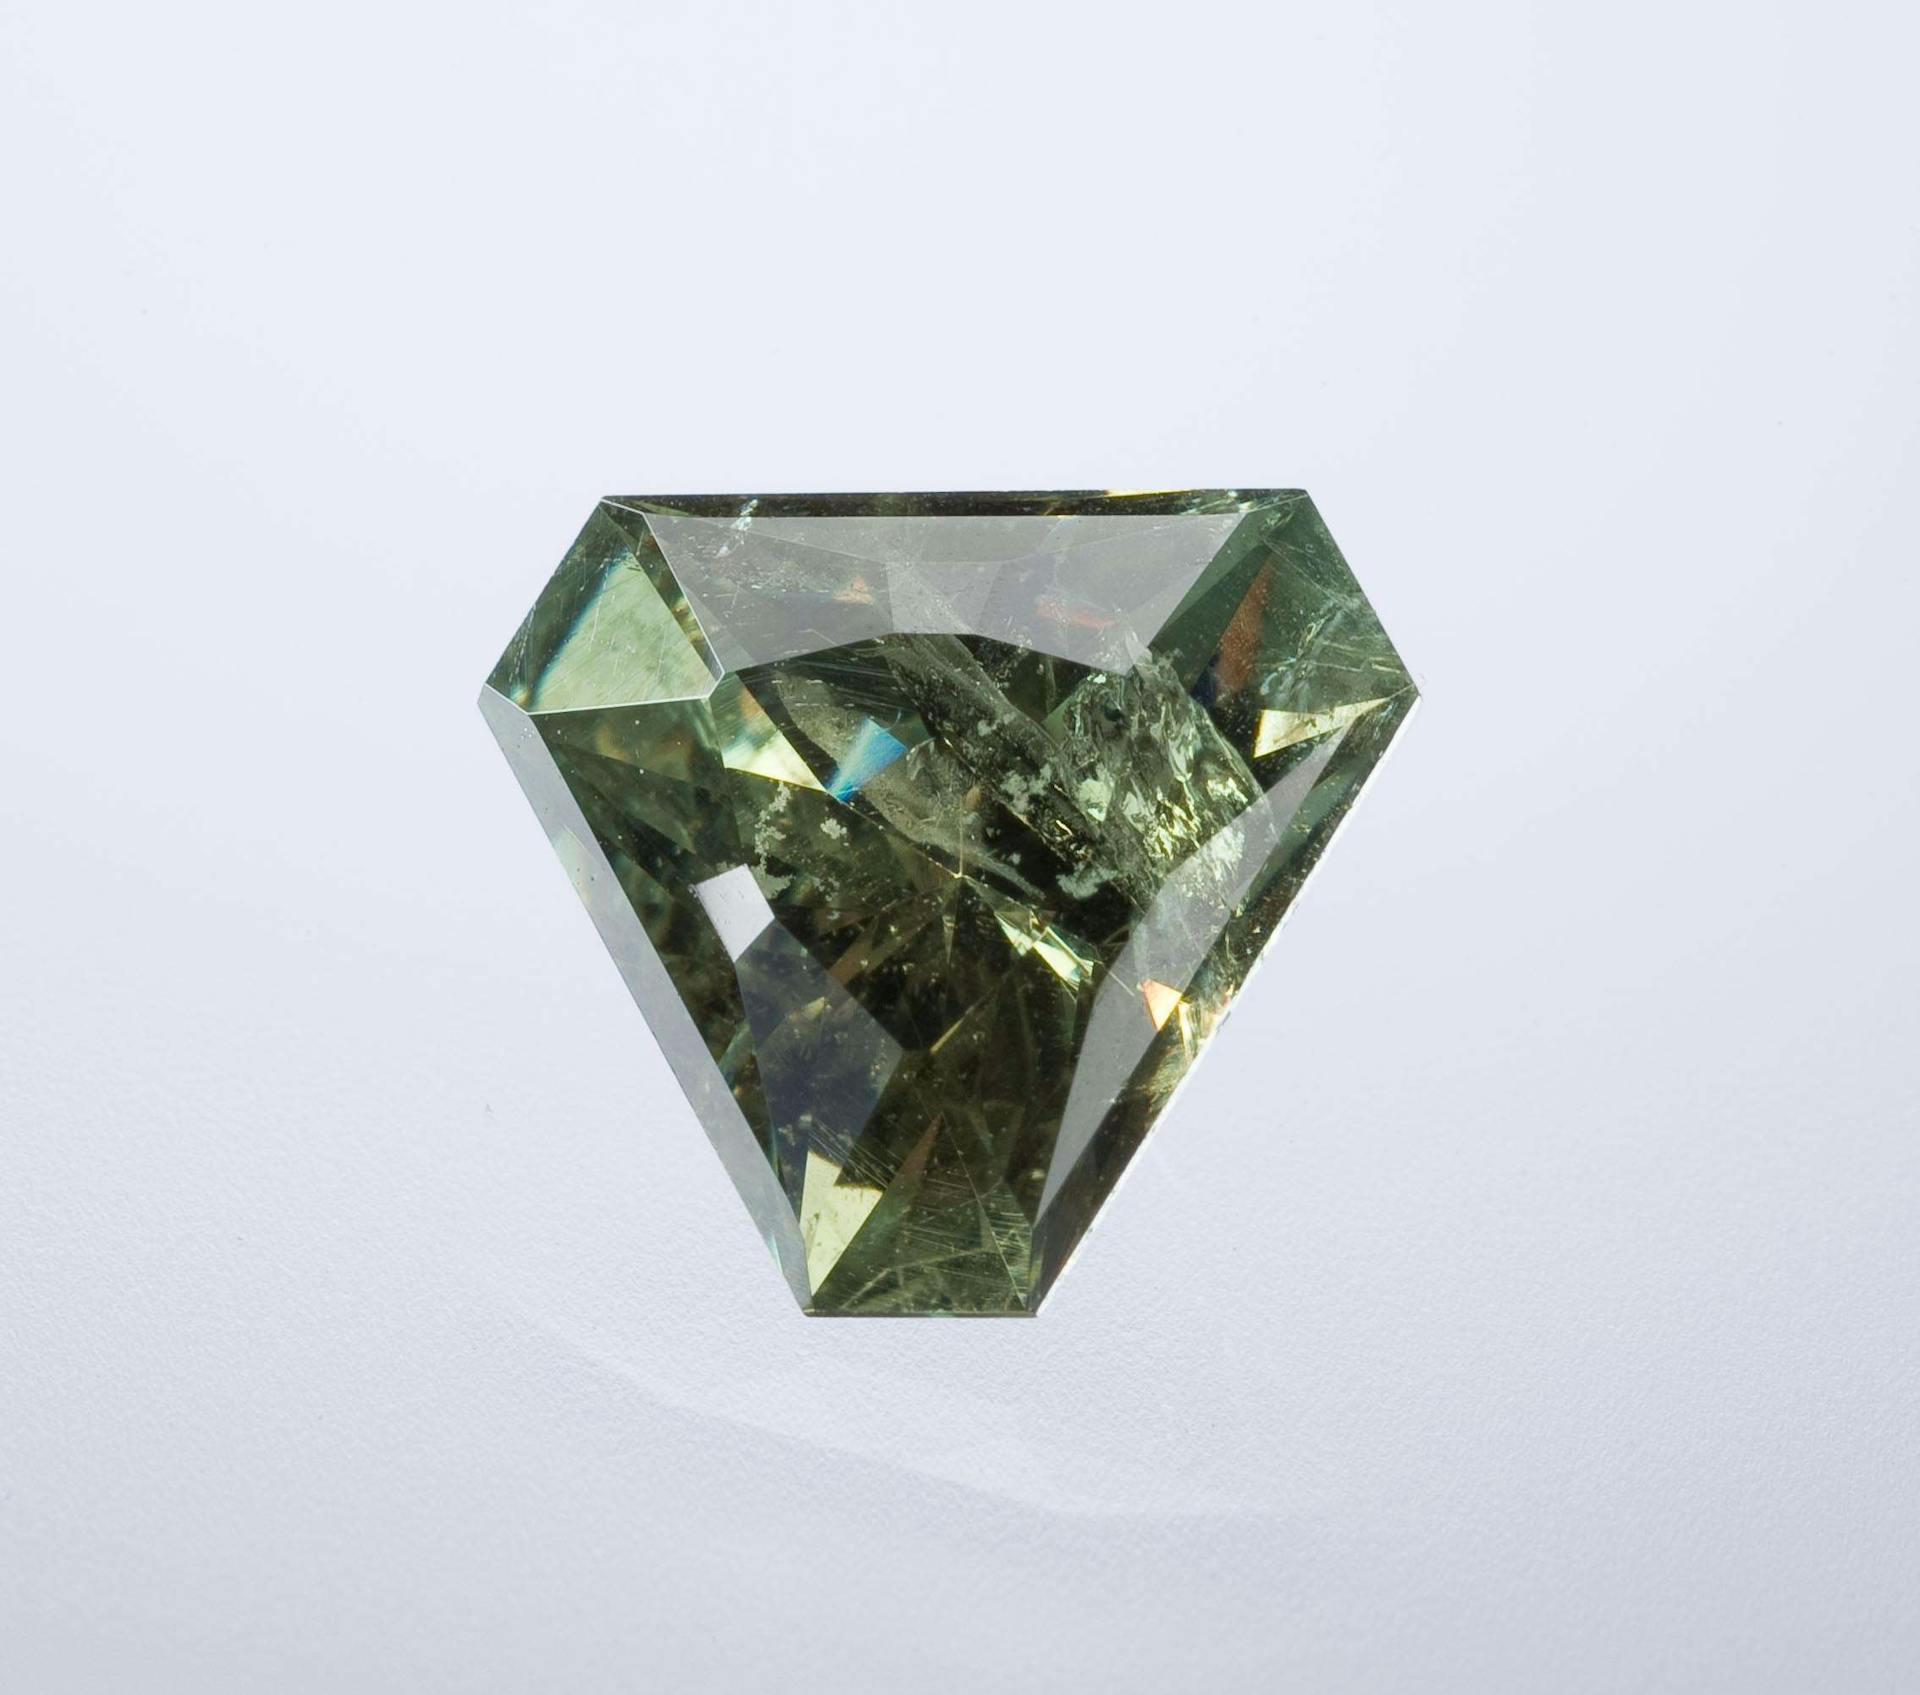 trilliant-cut demantoid garnet - expensive engagement ring stones